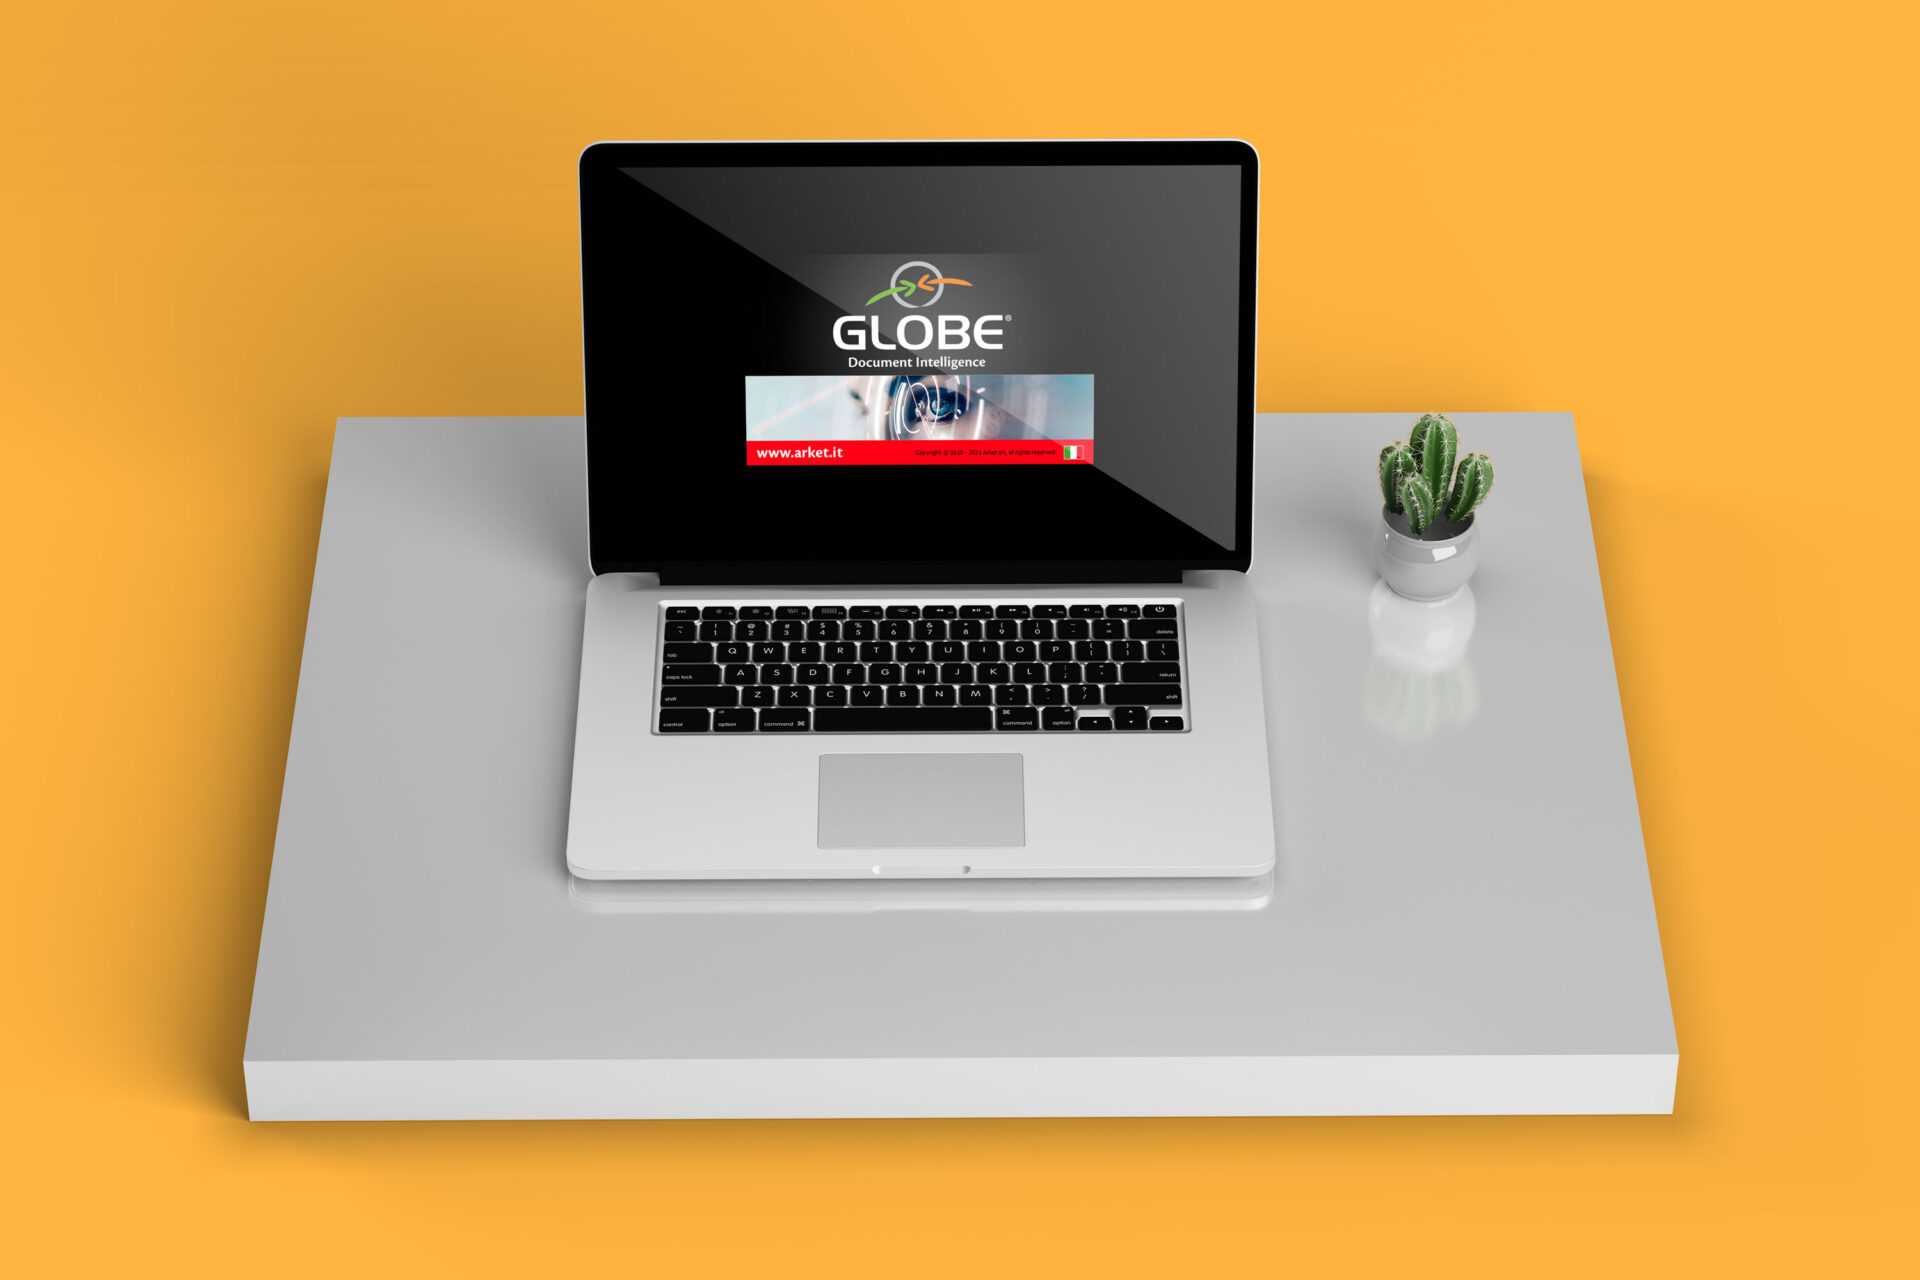 globe software documentale 3tech 1 Business Solution 3tech srl